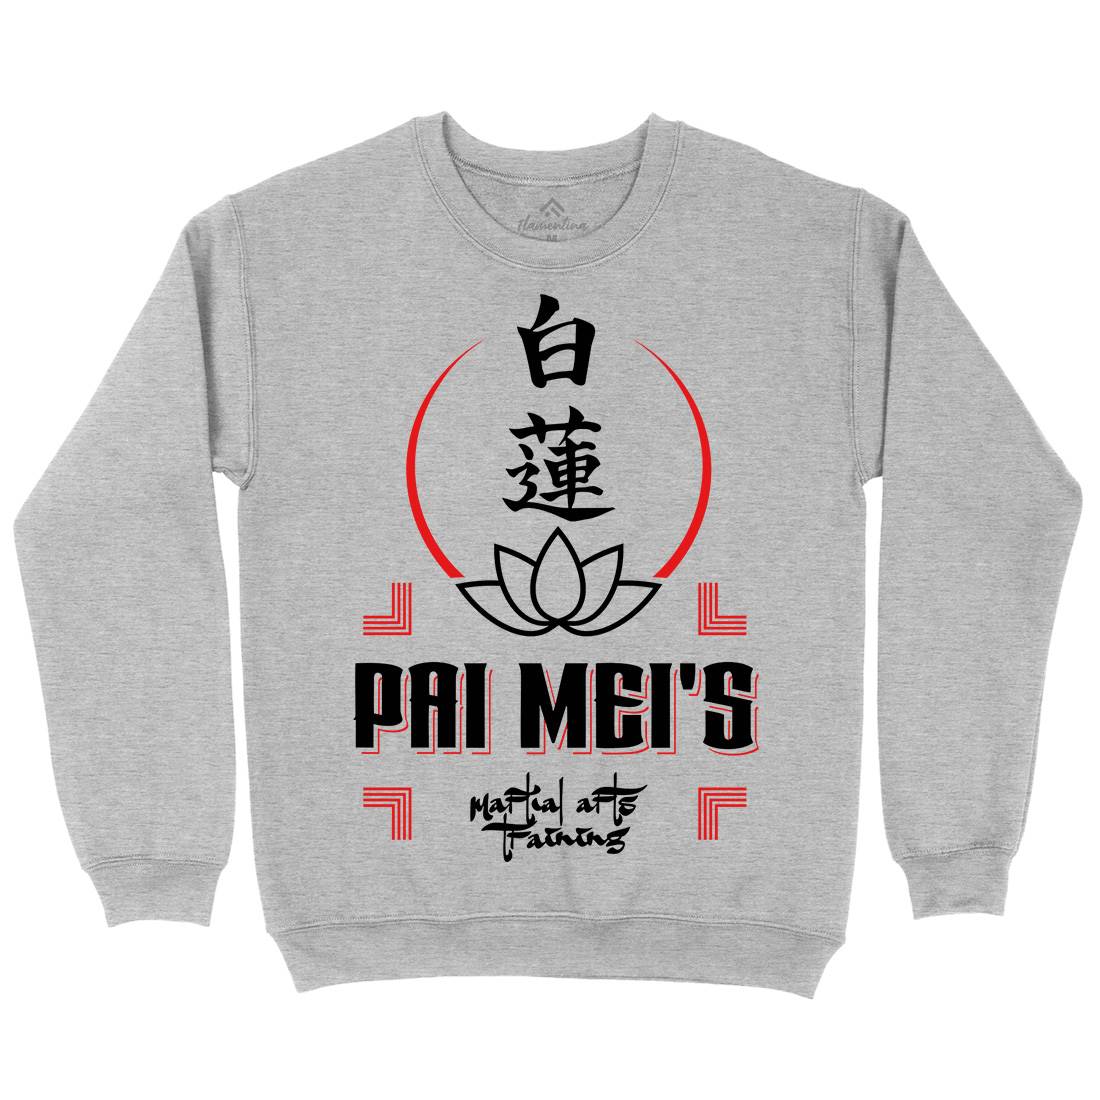 Pai Mei Kids Crew Neck Sweatshirt Retro D314